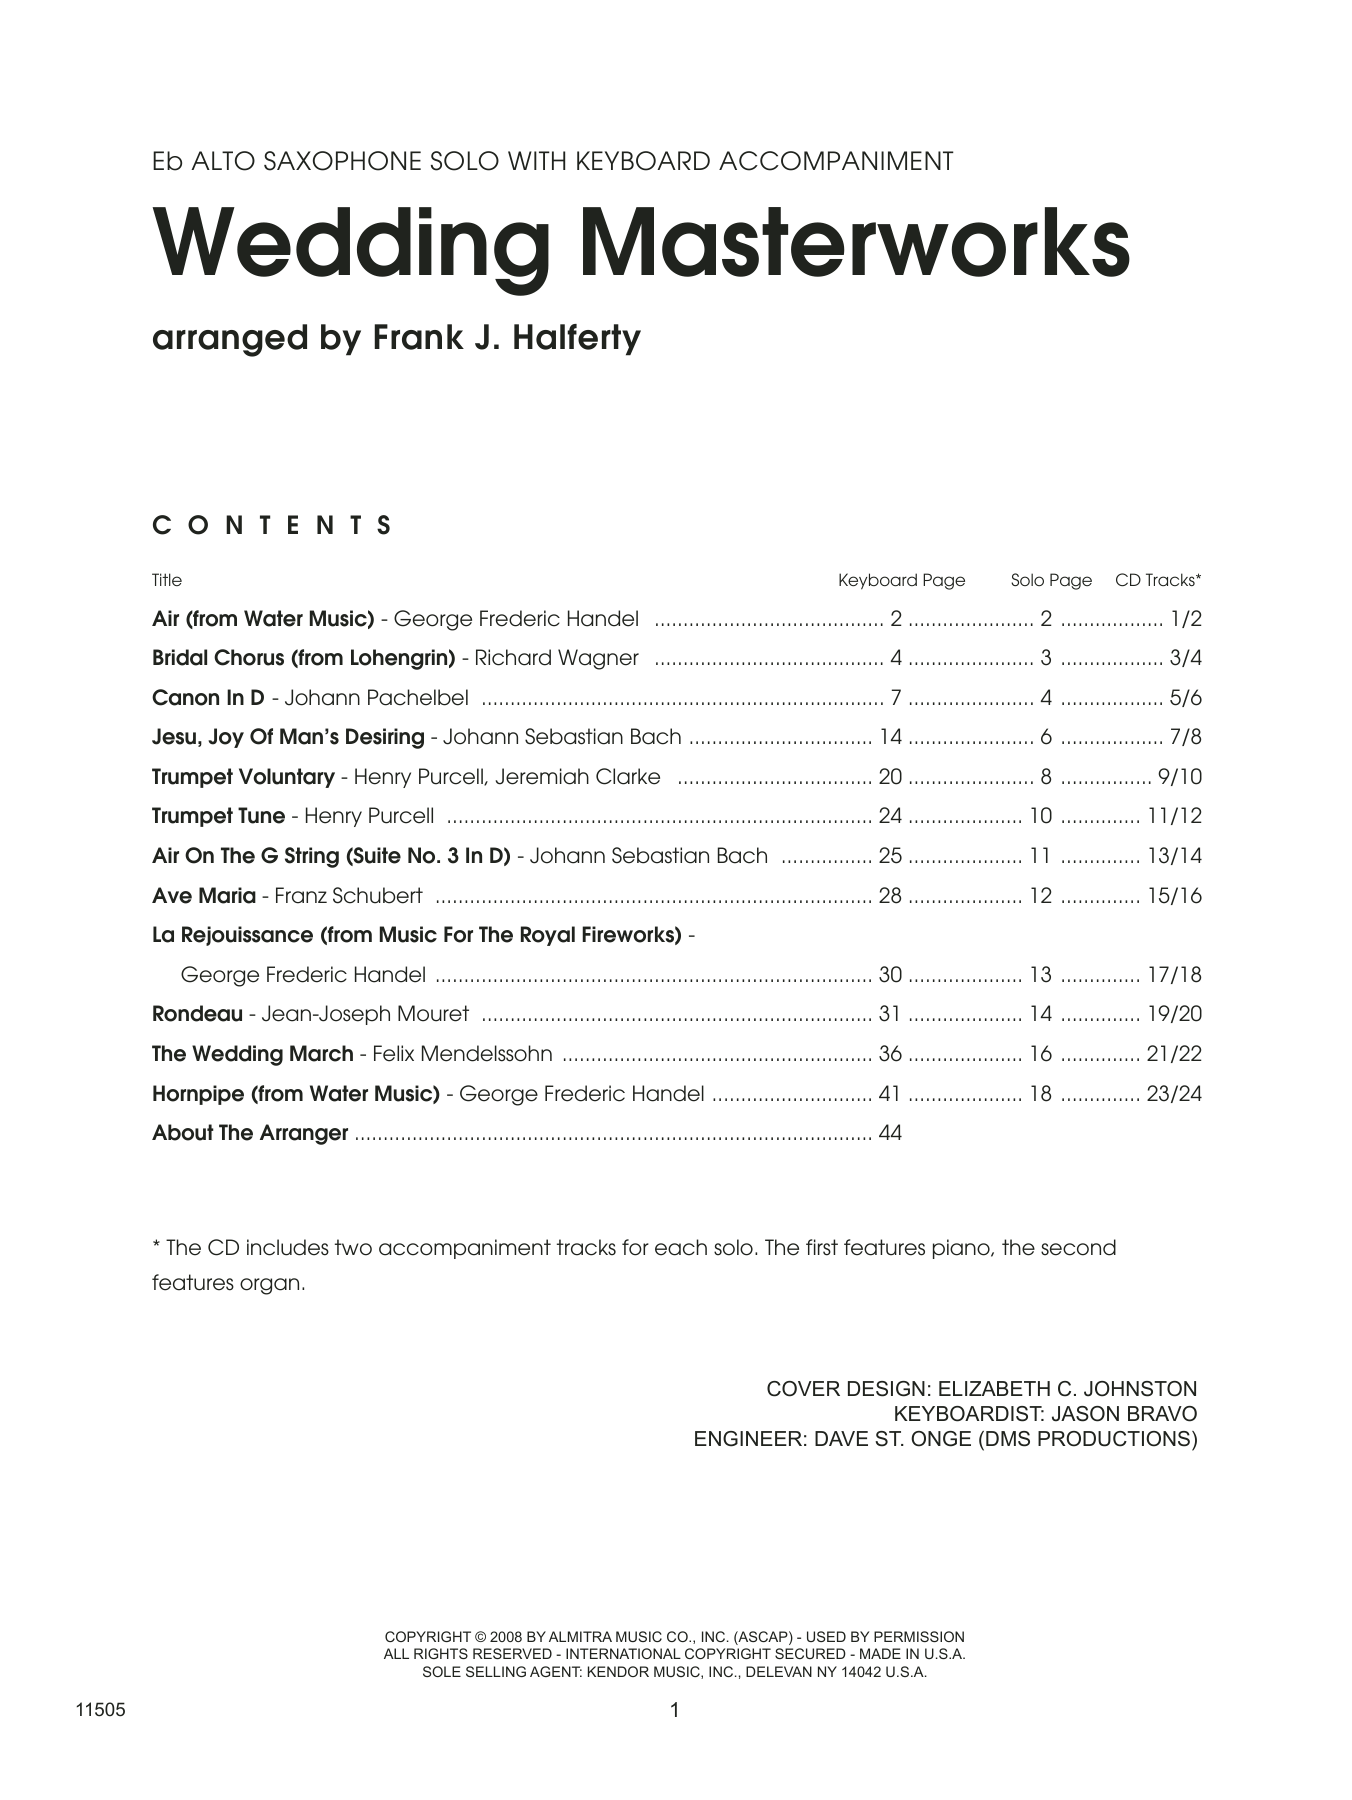 Download Frank J. Halferty Wedding Masterworks - Piano Accompanime Sheet Music